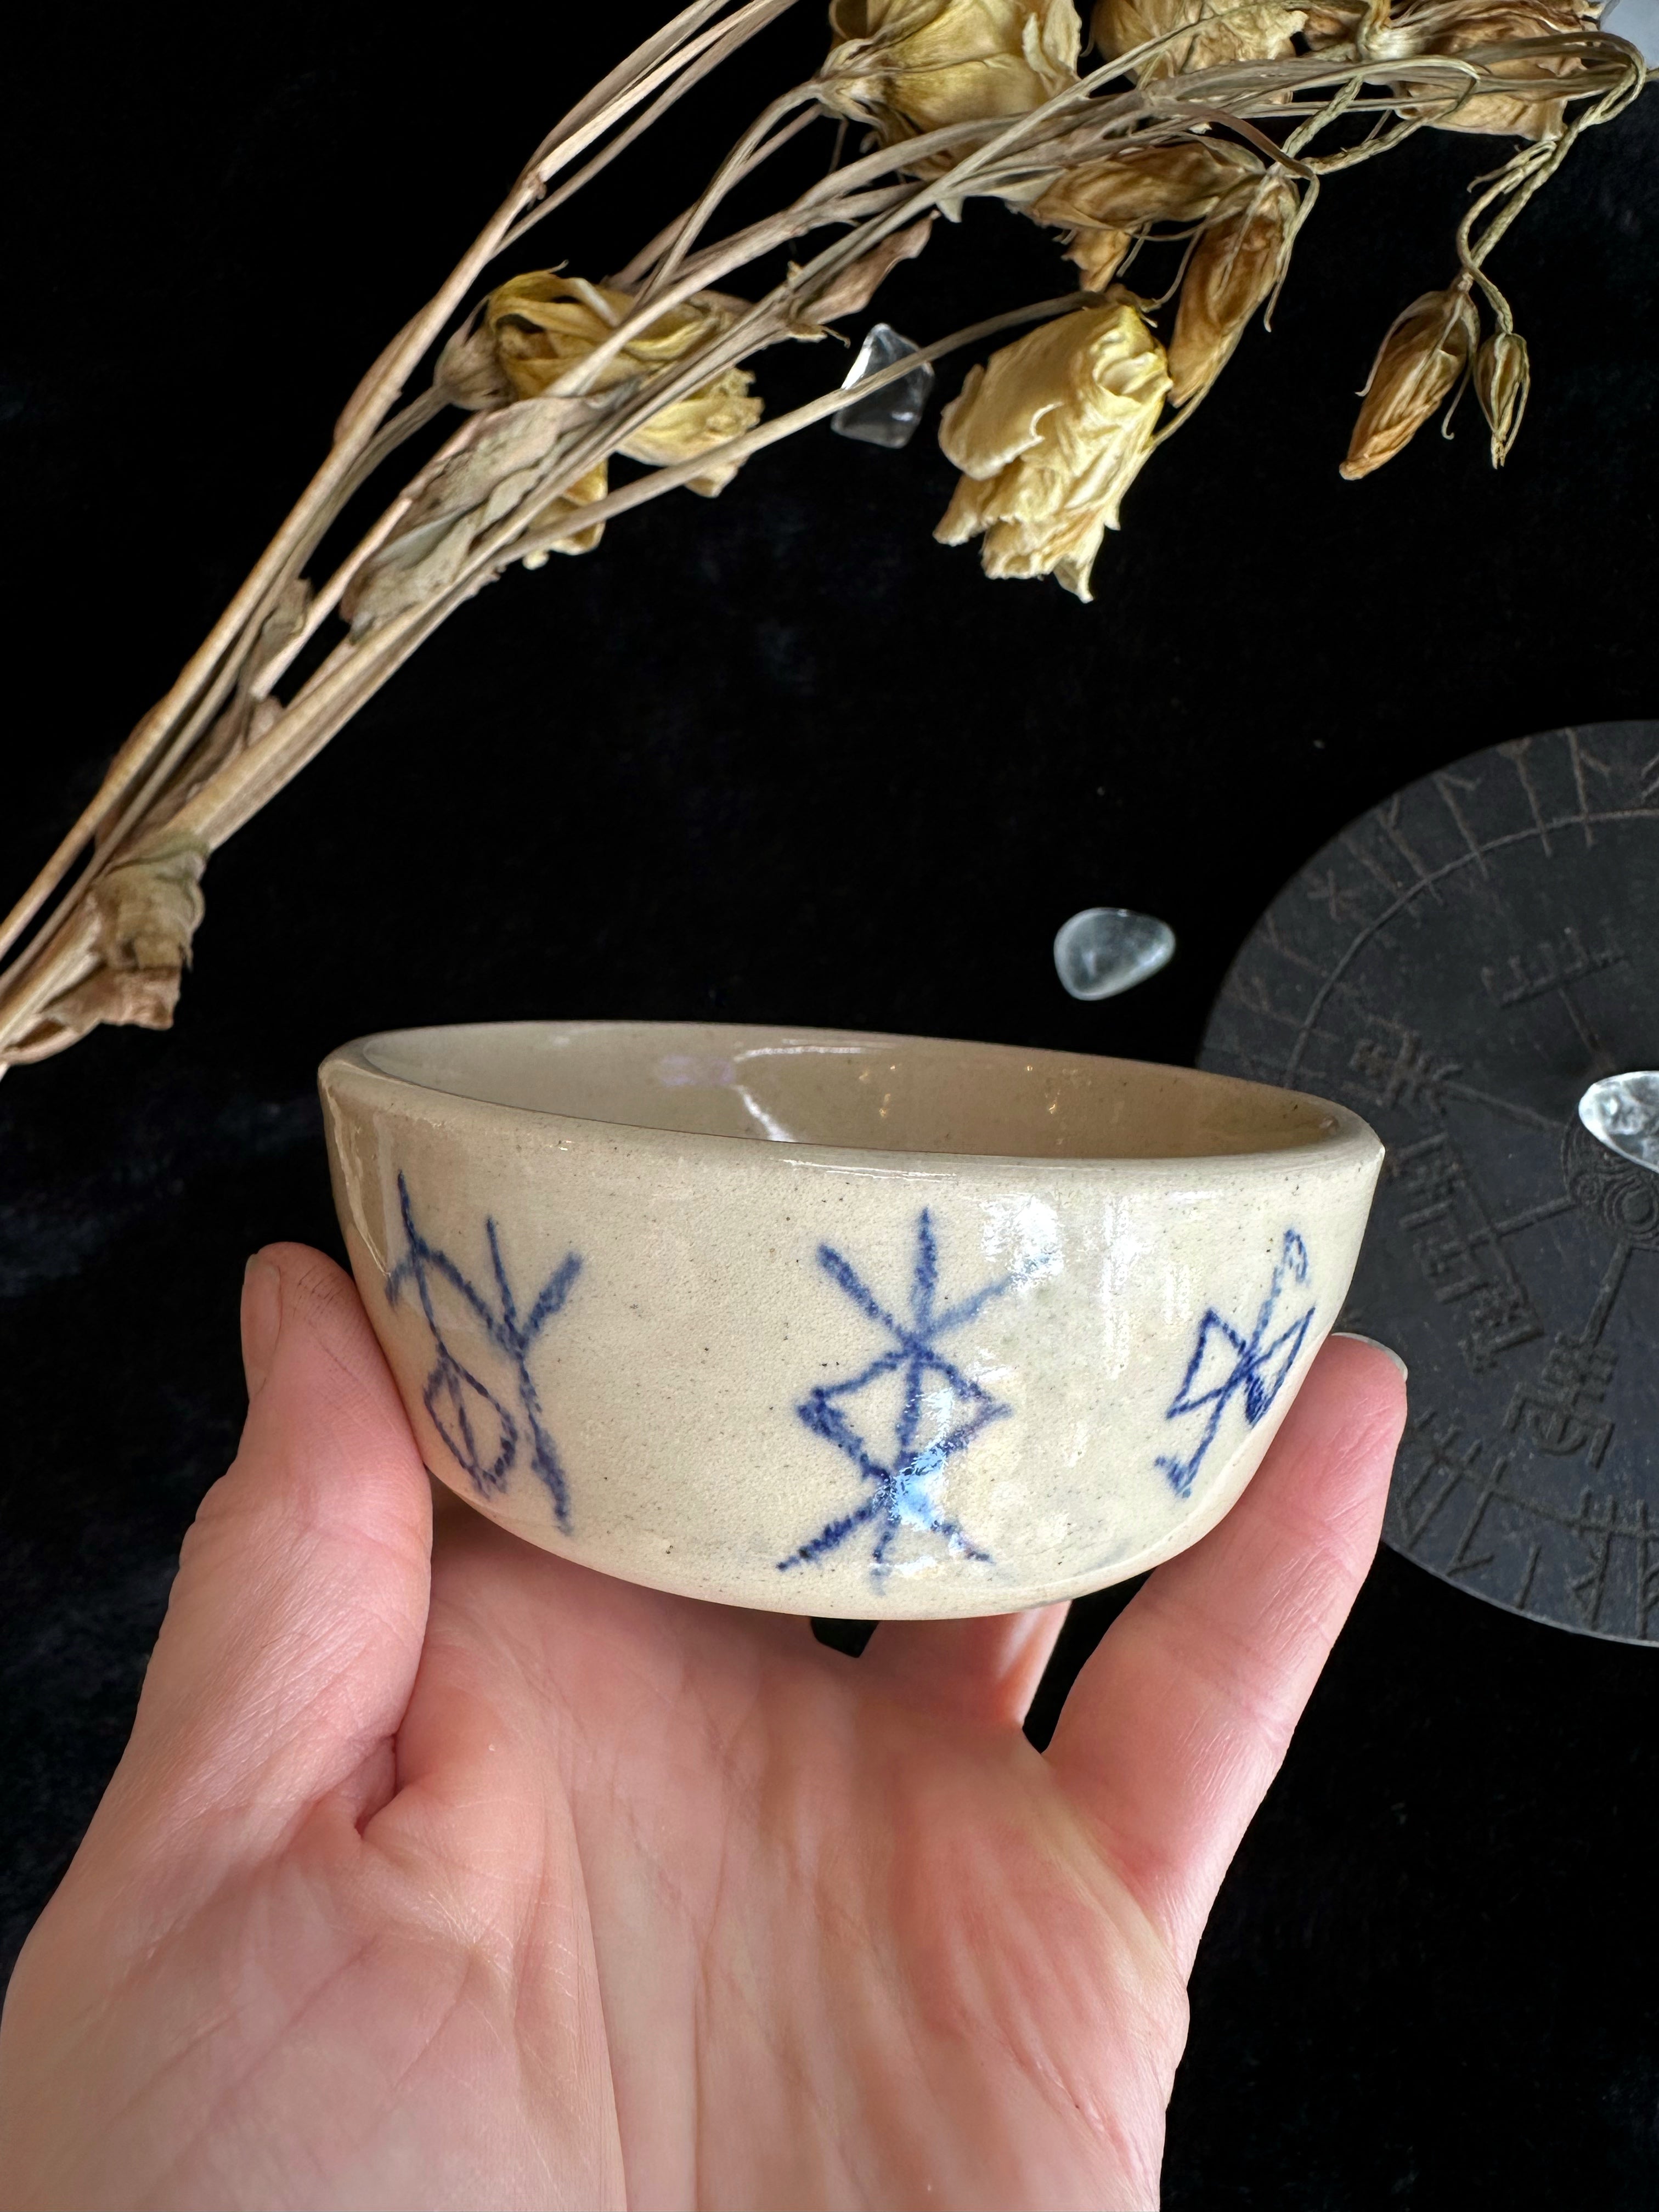 Bind Rune Ceramic Bowls and Vessels